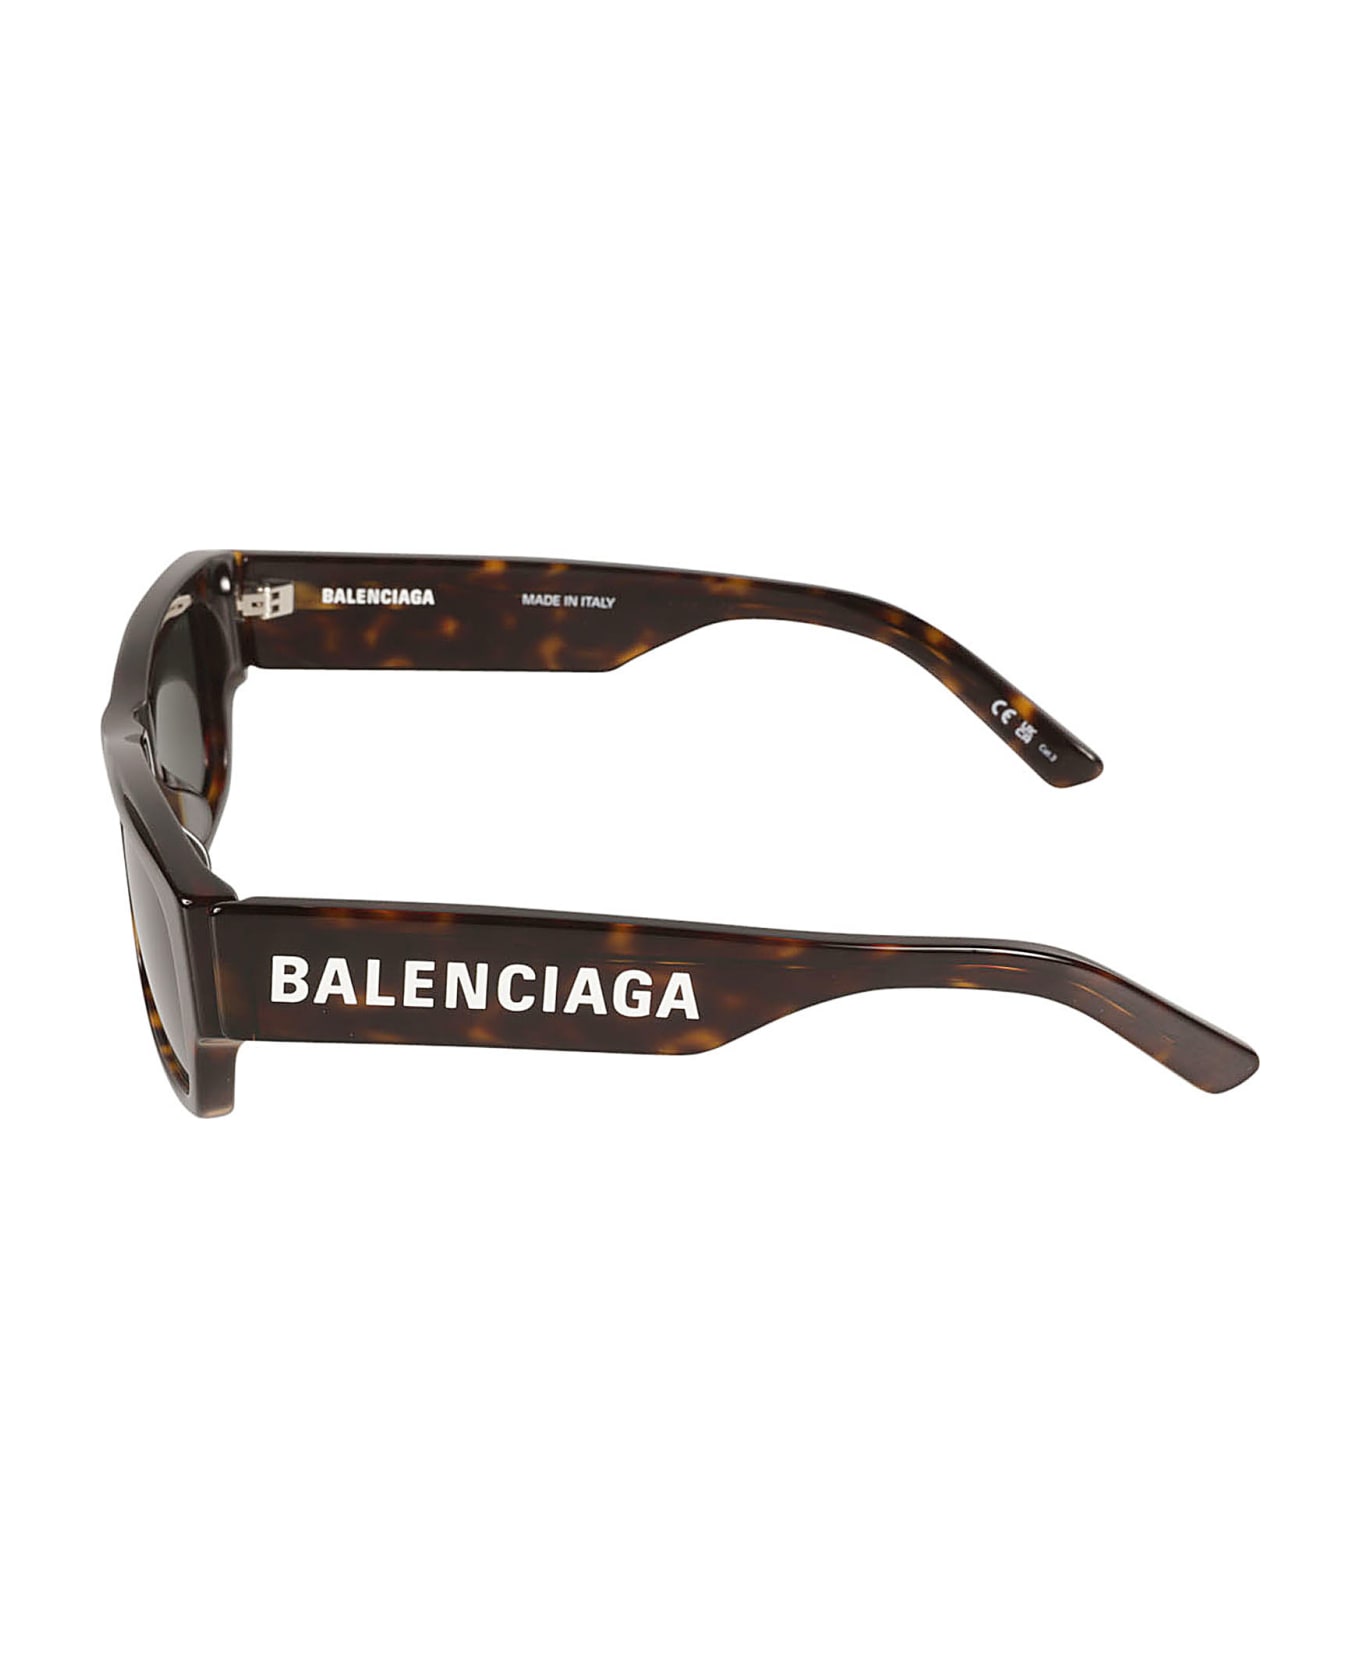 Balenciaga Eyewear Logo Sided Flame Effect Rectangular Frame Sunglasses - Havana/Green